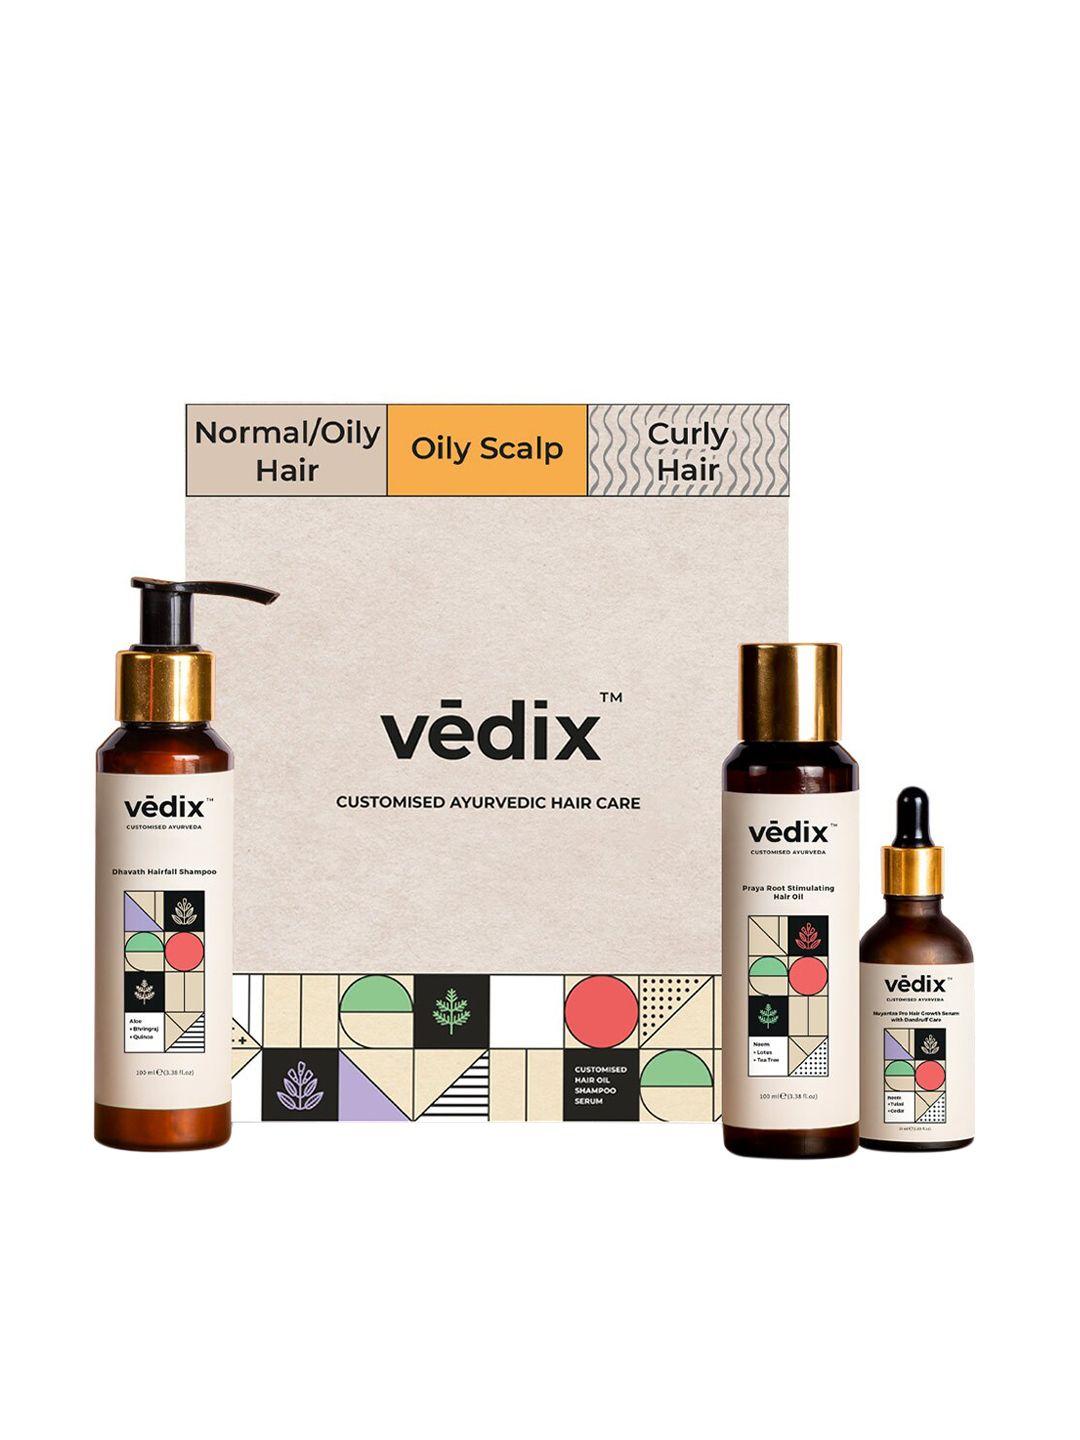 vedix customized hair fall & dandruff control regimen for normal/oily hair-curly hair